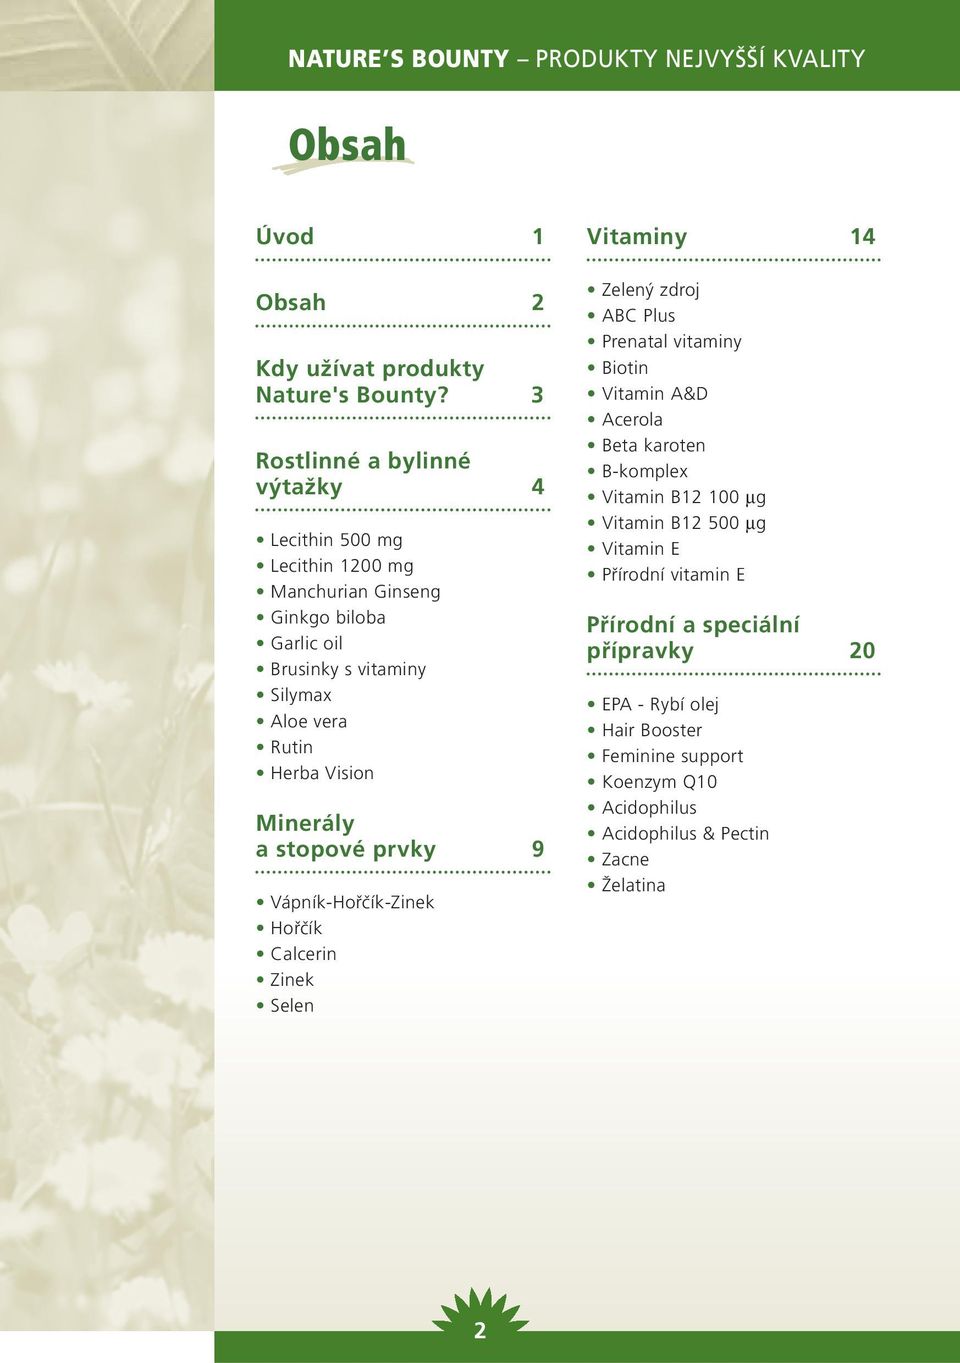 Herba Vision Minerály a stopové prvky 9 Vápník-Hořčík-Zinek Hořčík Calcerin Zinek Selen Vitaminy 14 Zelený zdroj ABC Plus Prenatal vitaminy Biotin